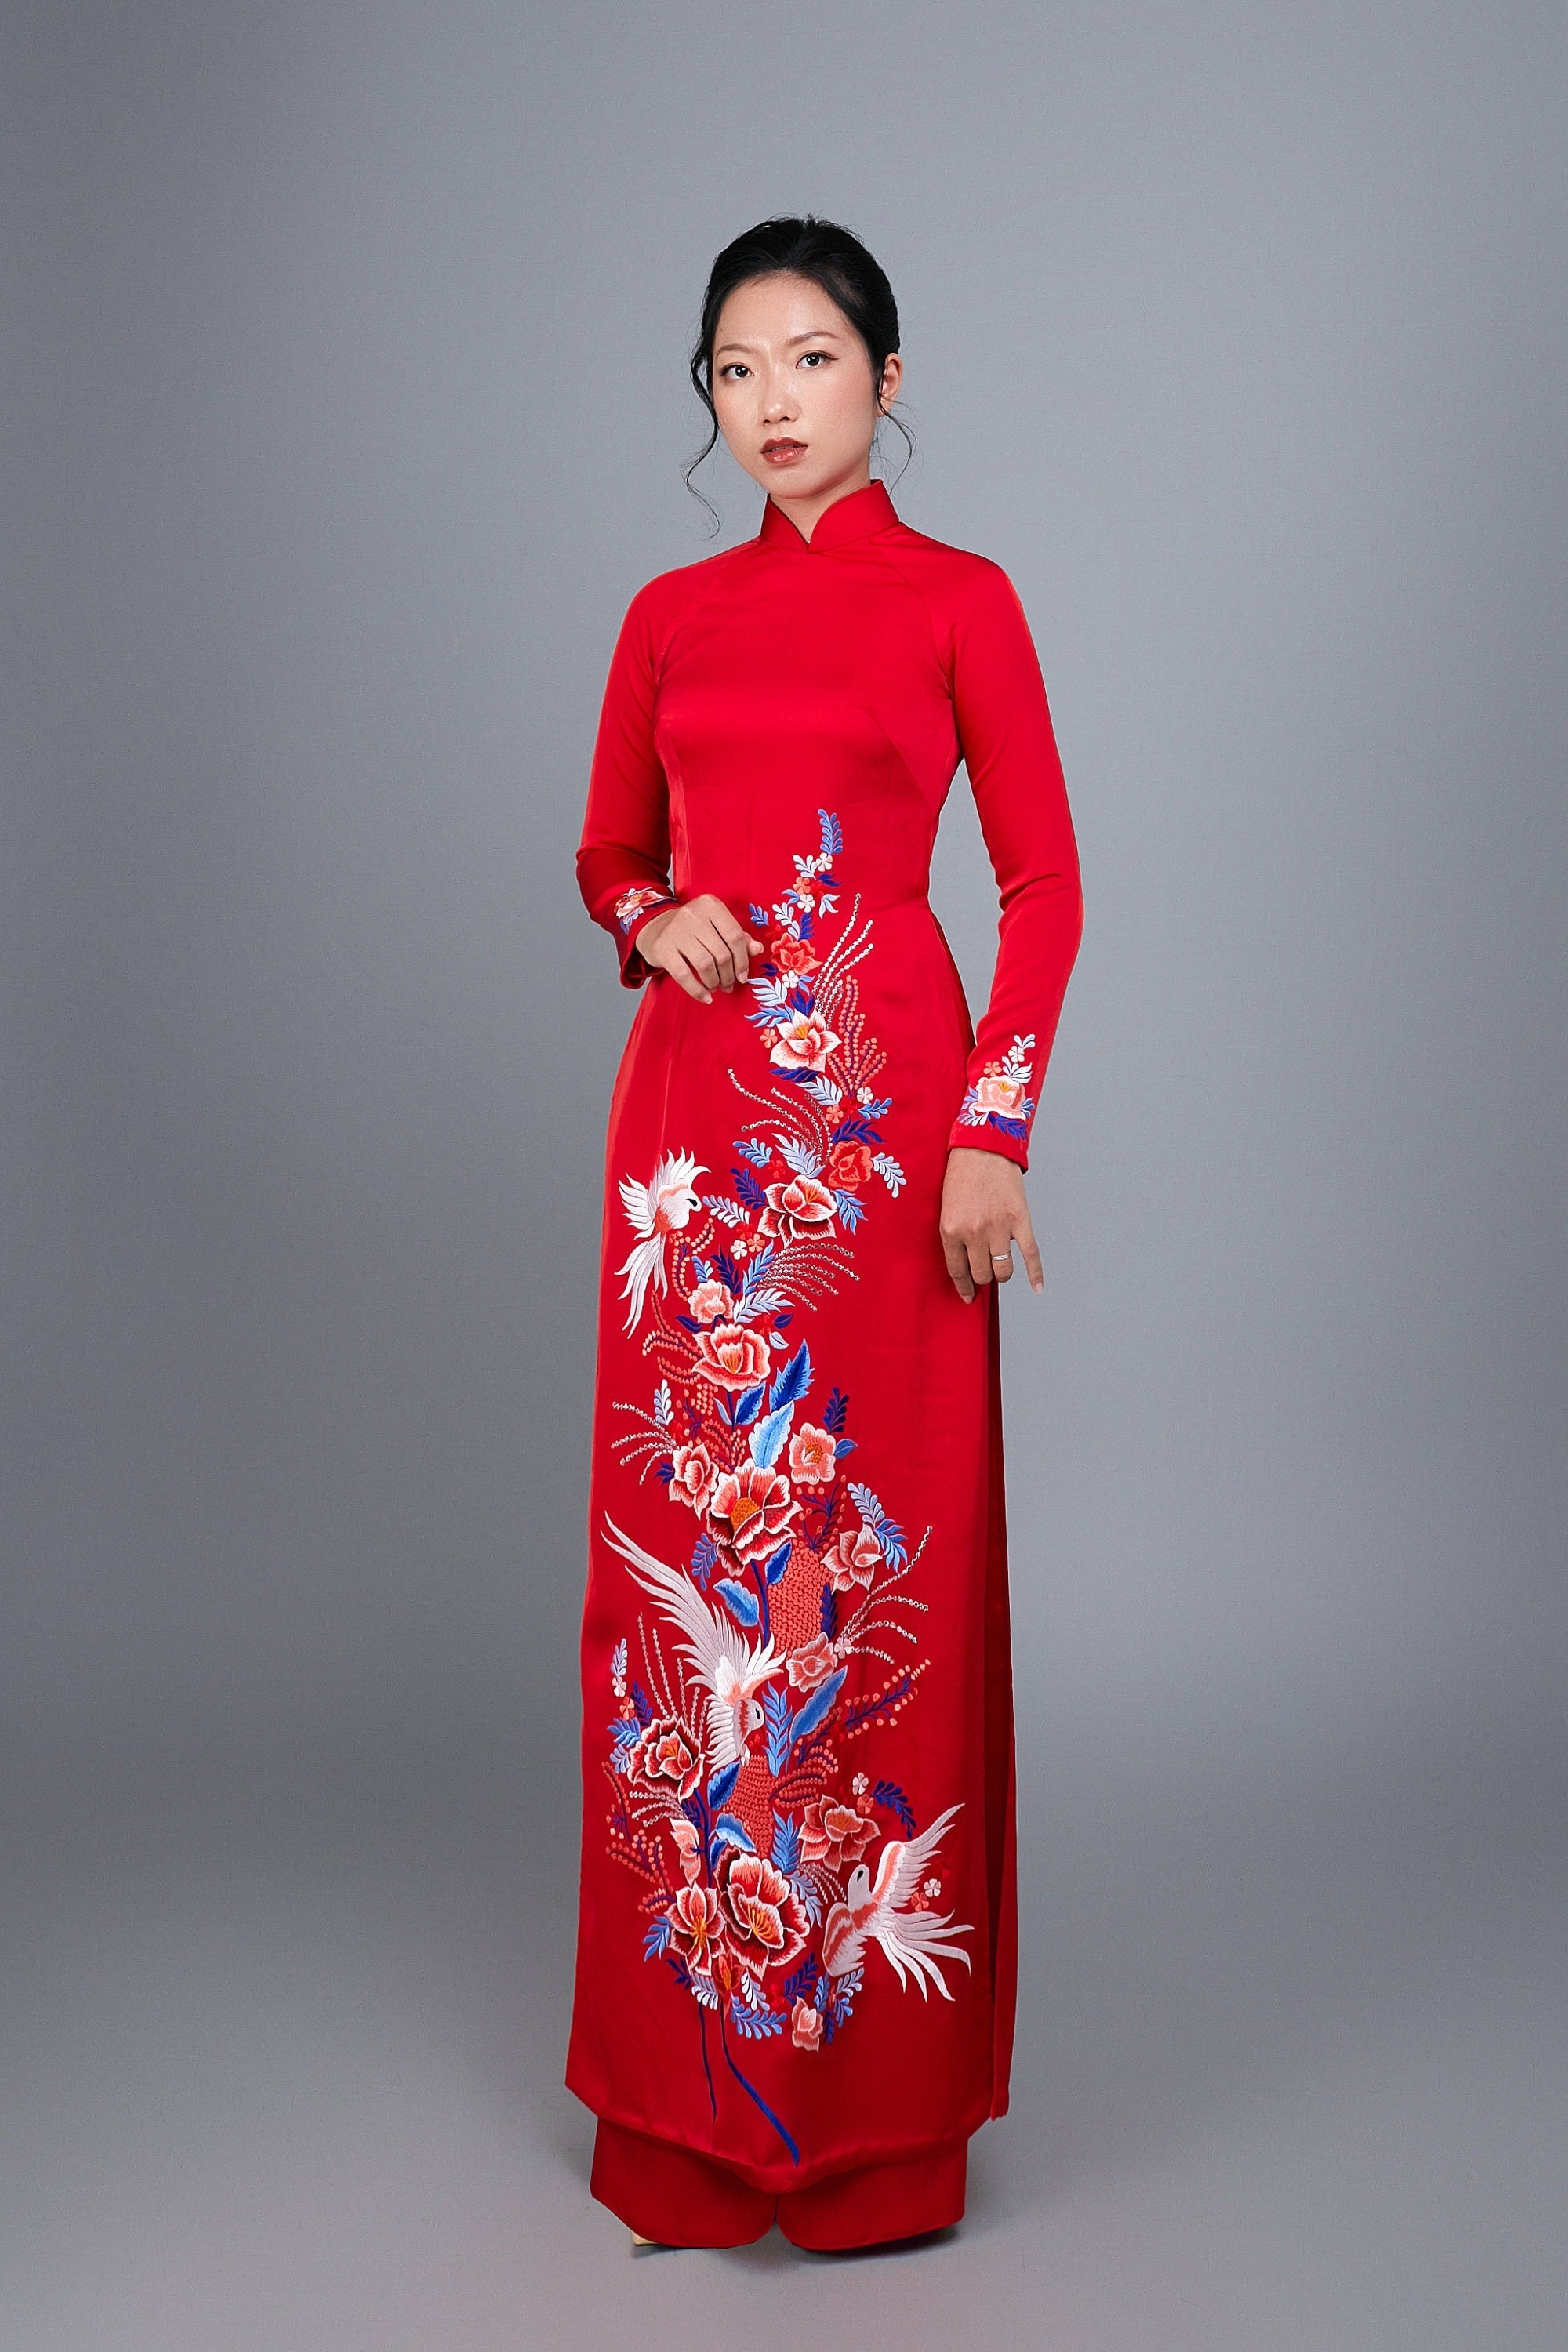 Women's ao dai dress Vietnamese traditional long dress. High